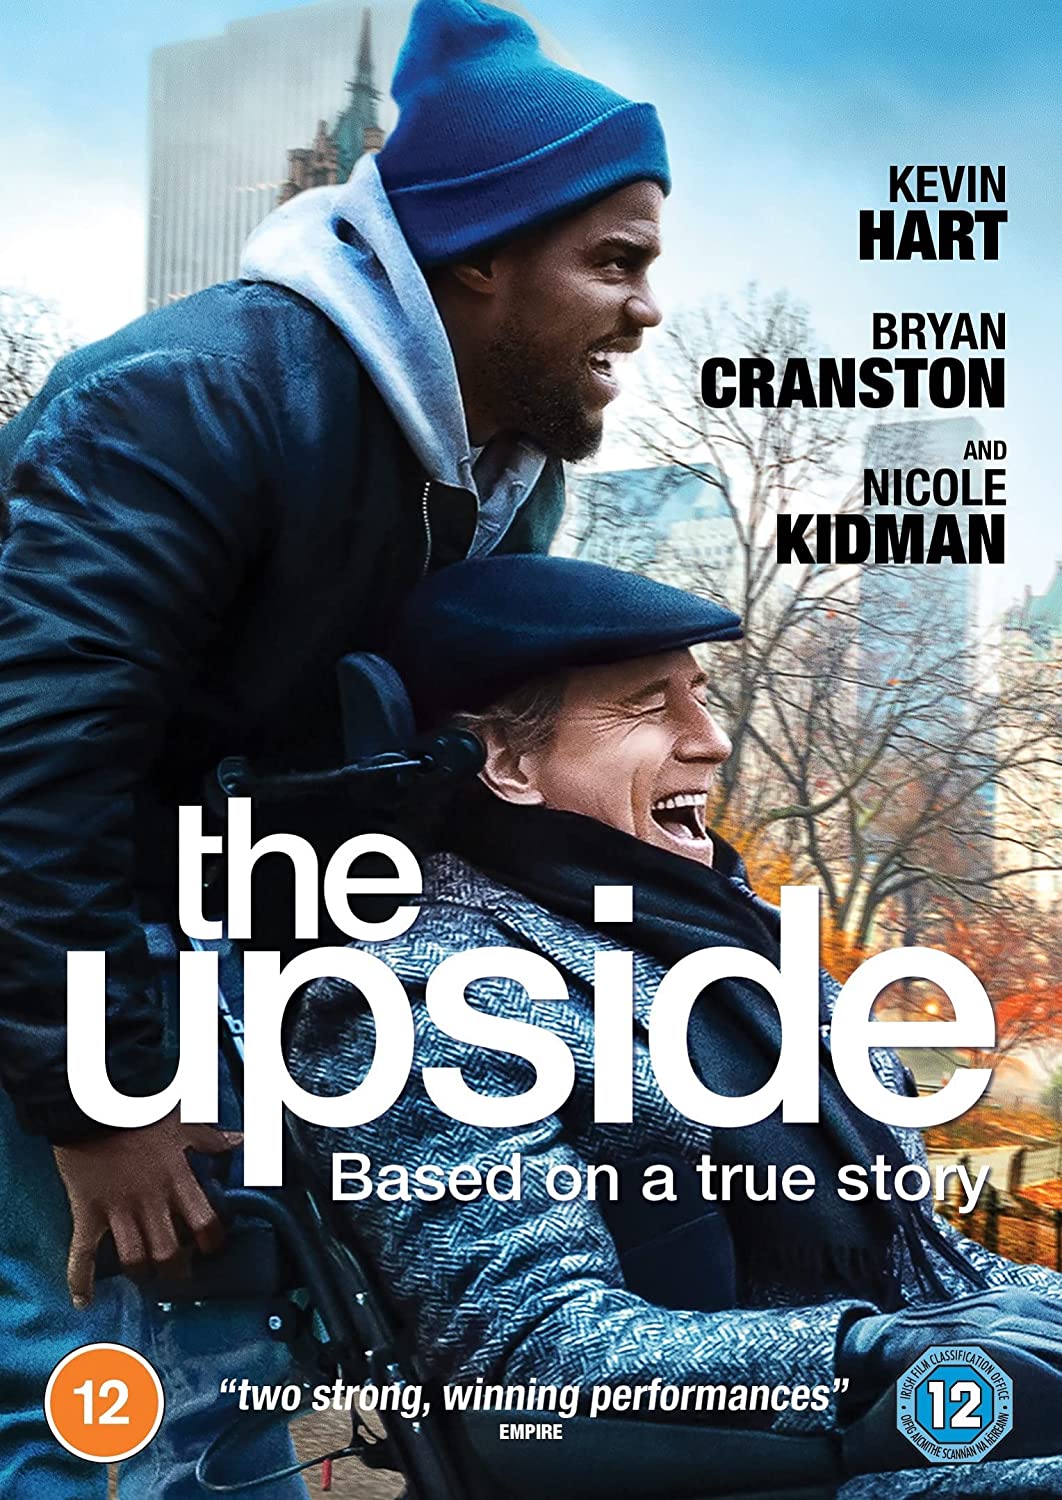 The Upside  [2021] - Comedy/Drama [[DVD]]